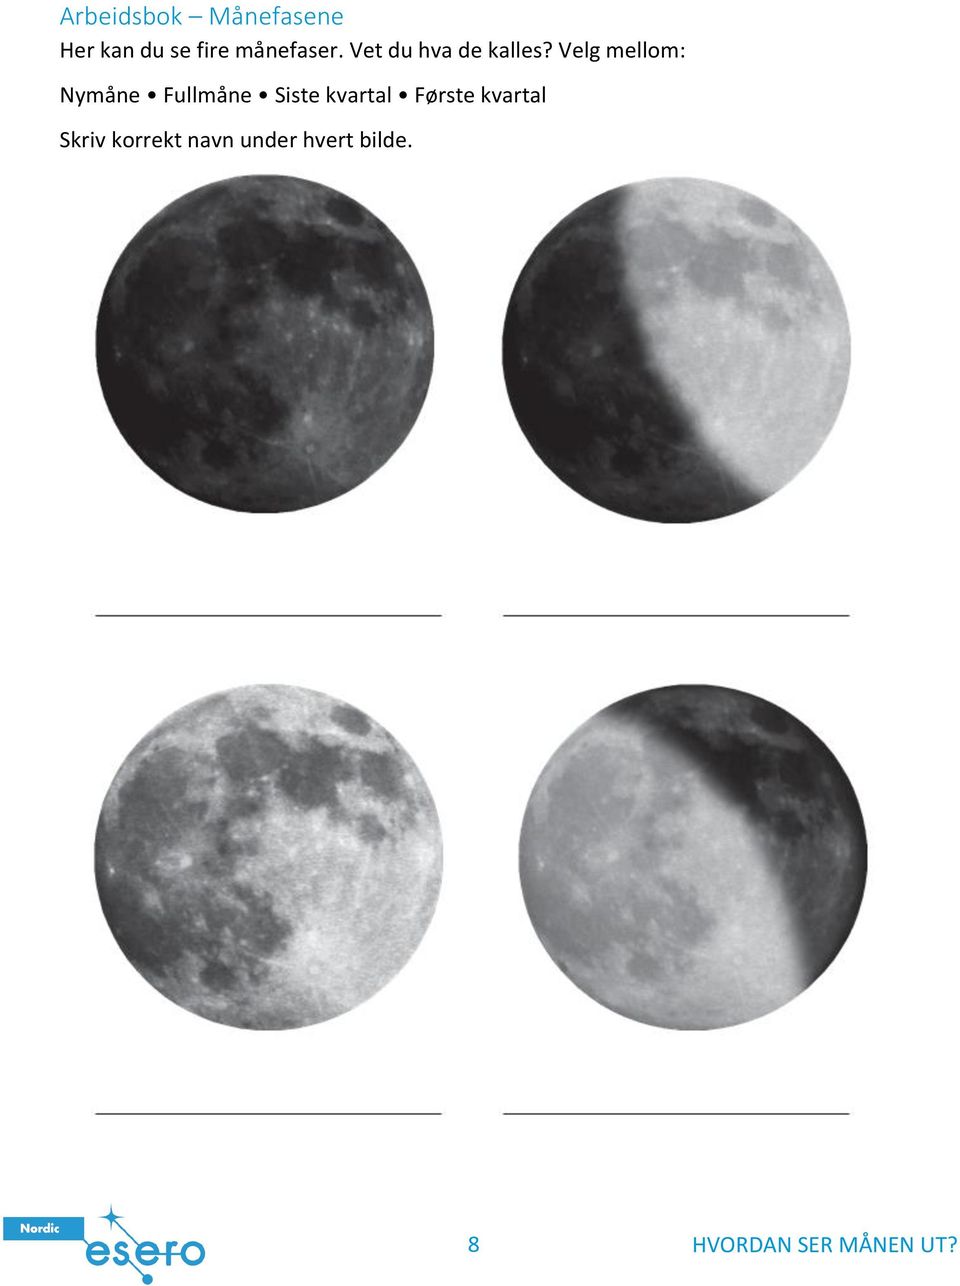 Velg mellom: Nymåne Fullmåne Siste kvartal